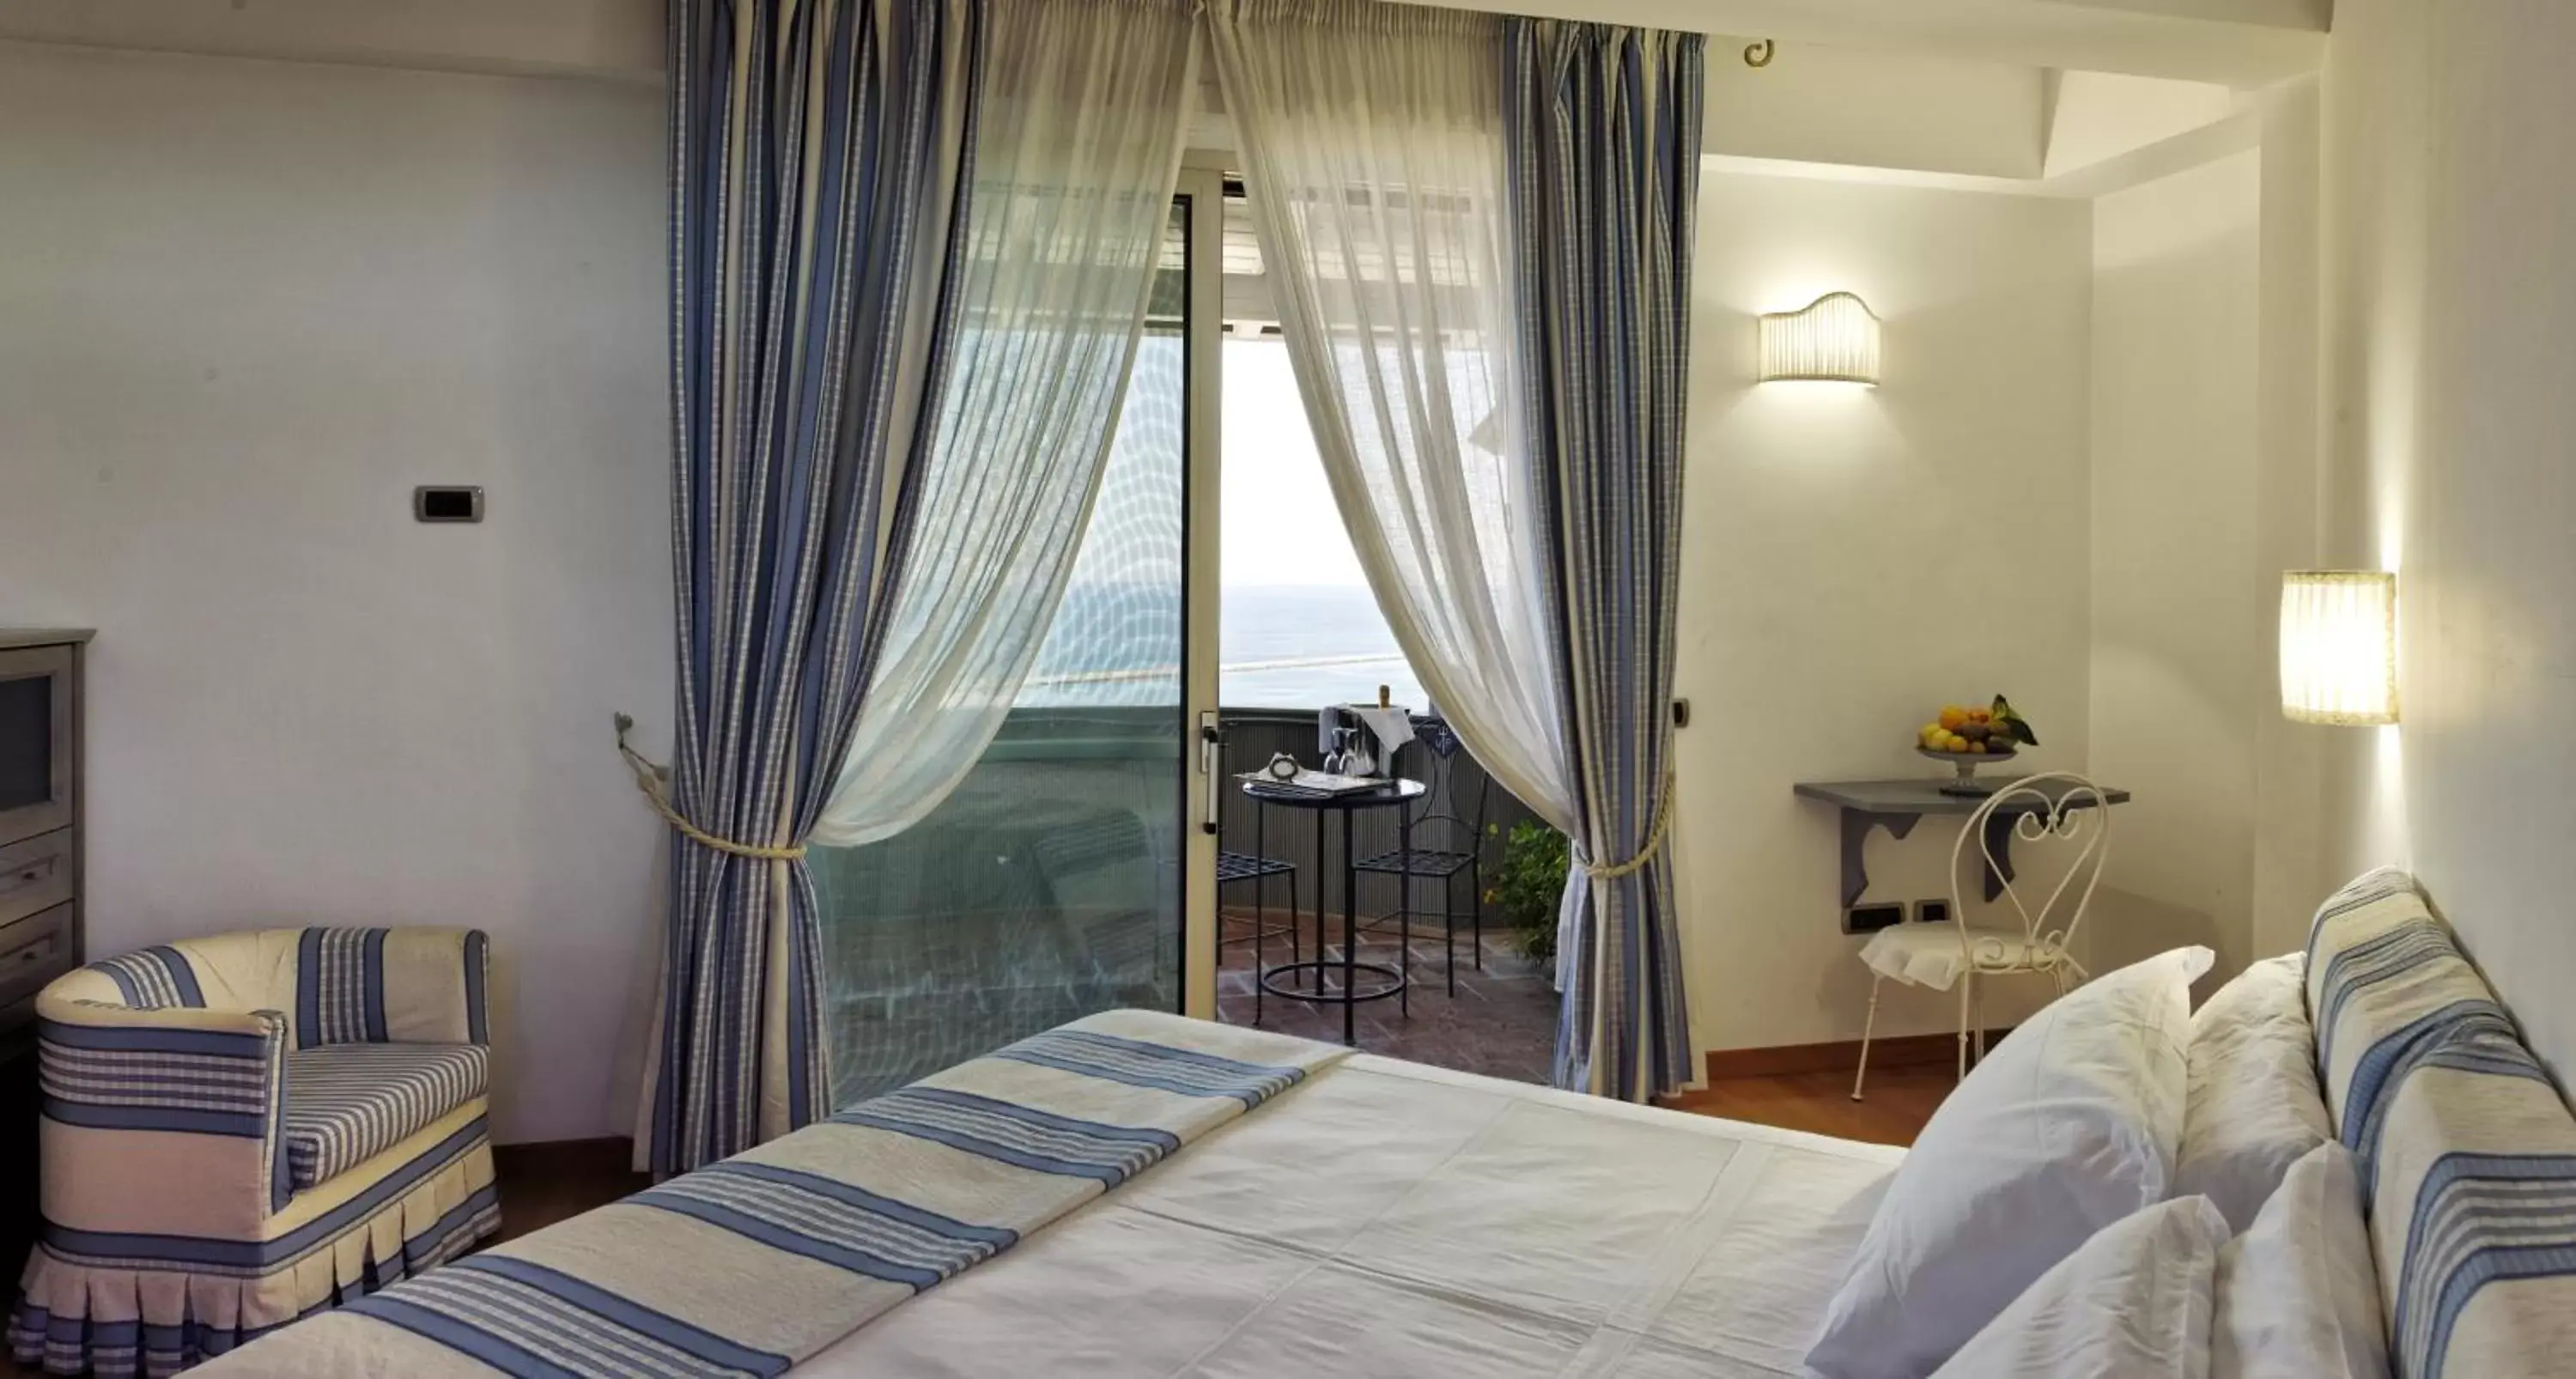 Bed, Room Photo in Hotel Villa Poseidon & Events